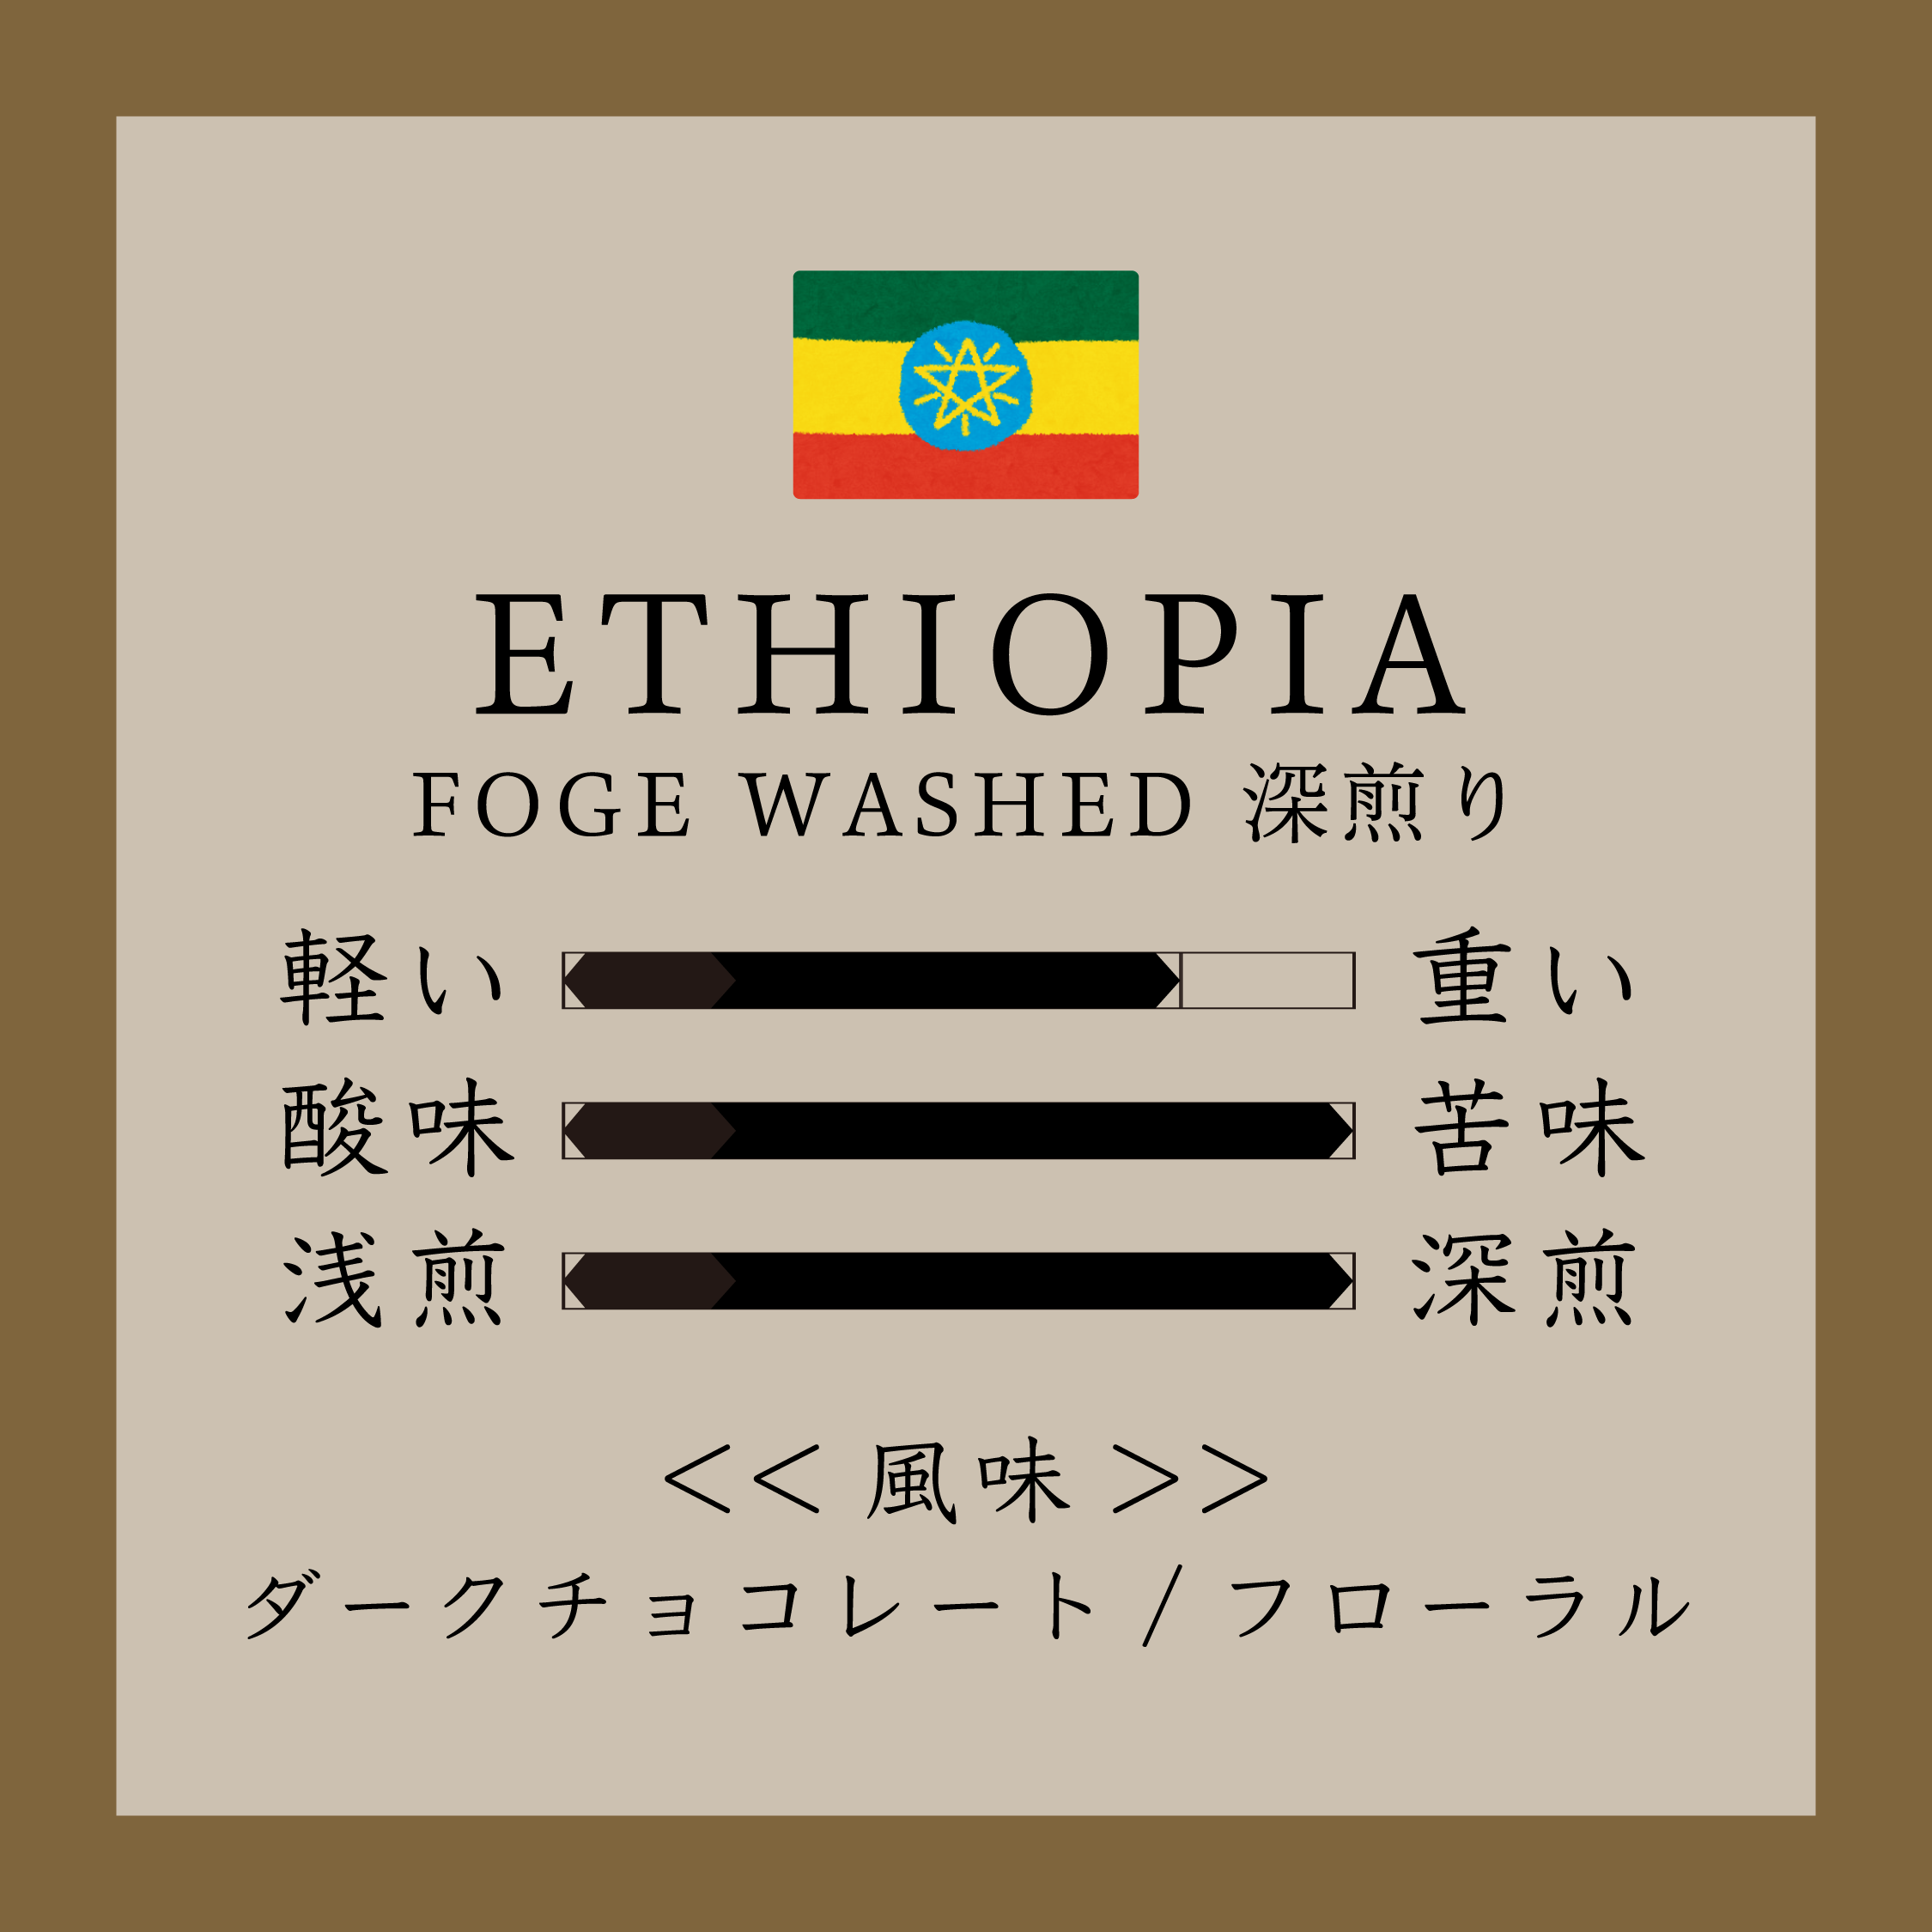 Ethiopia Foge Washed 深煎り 150g